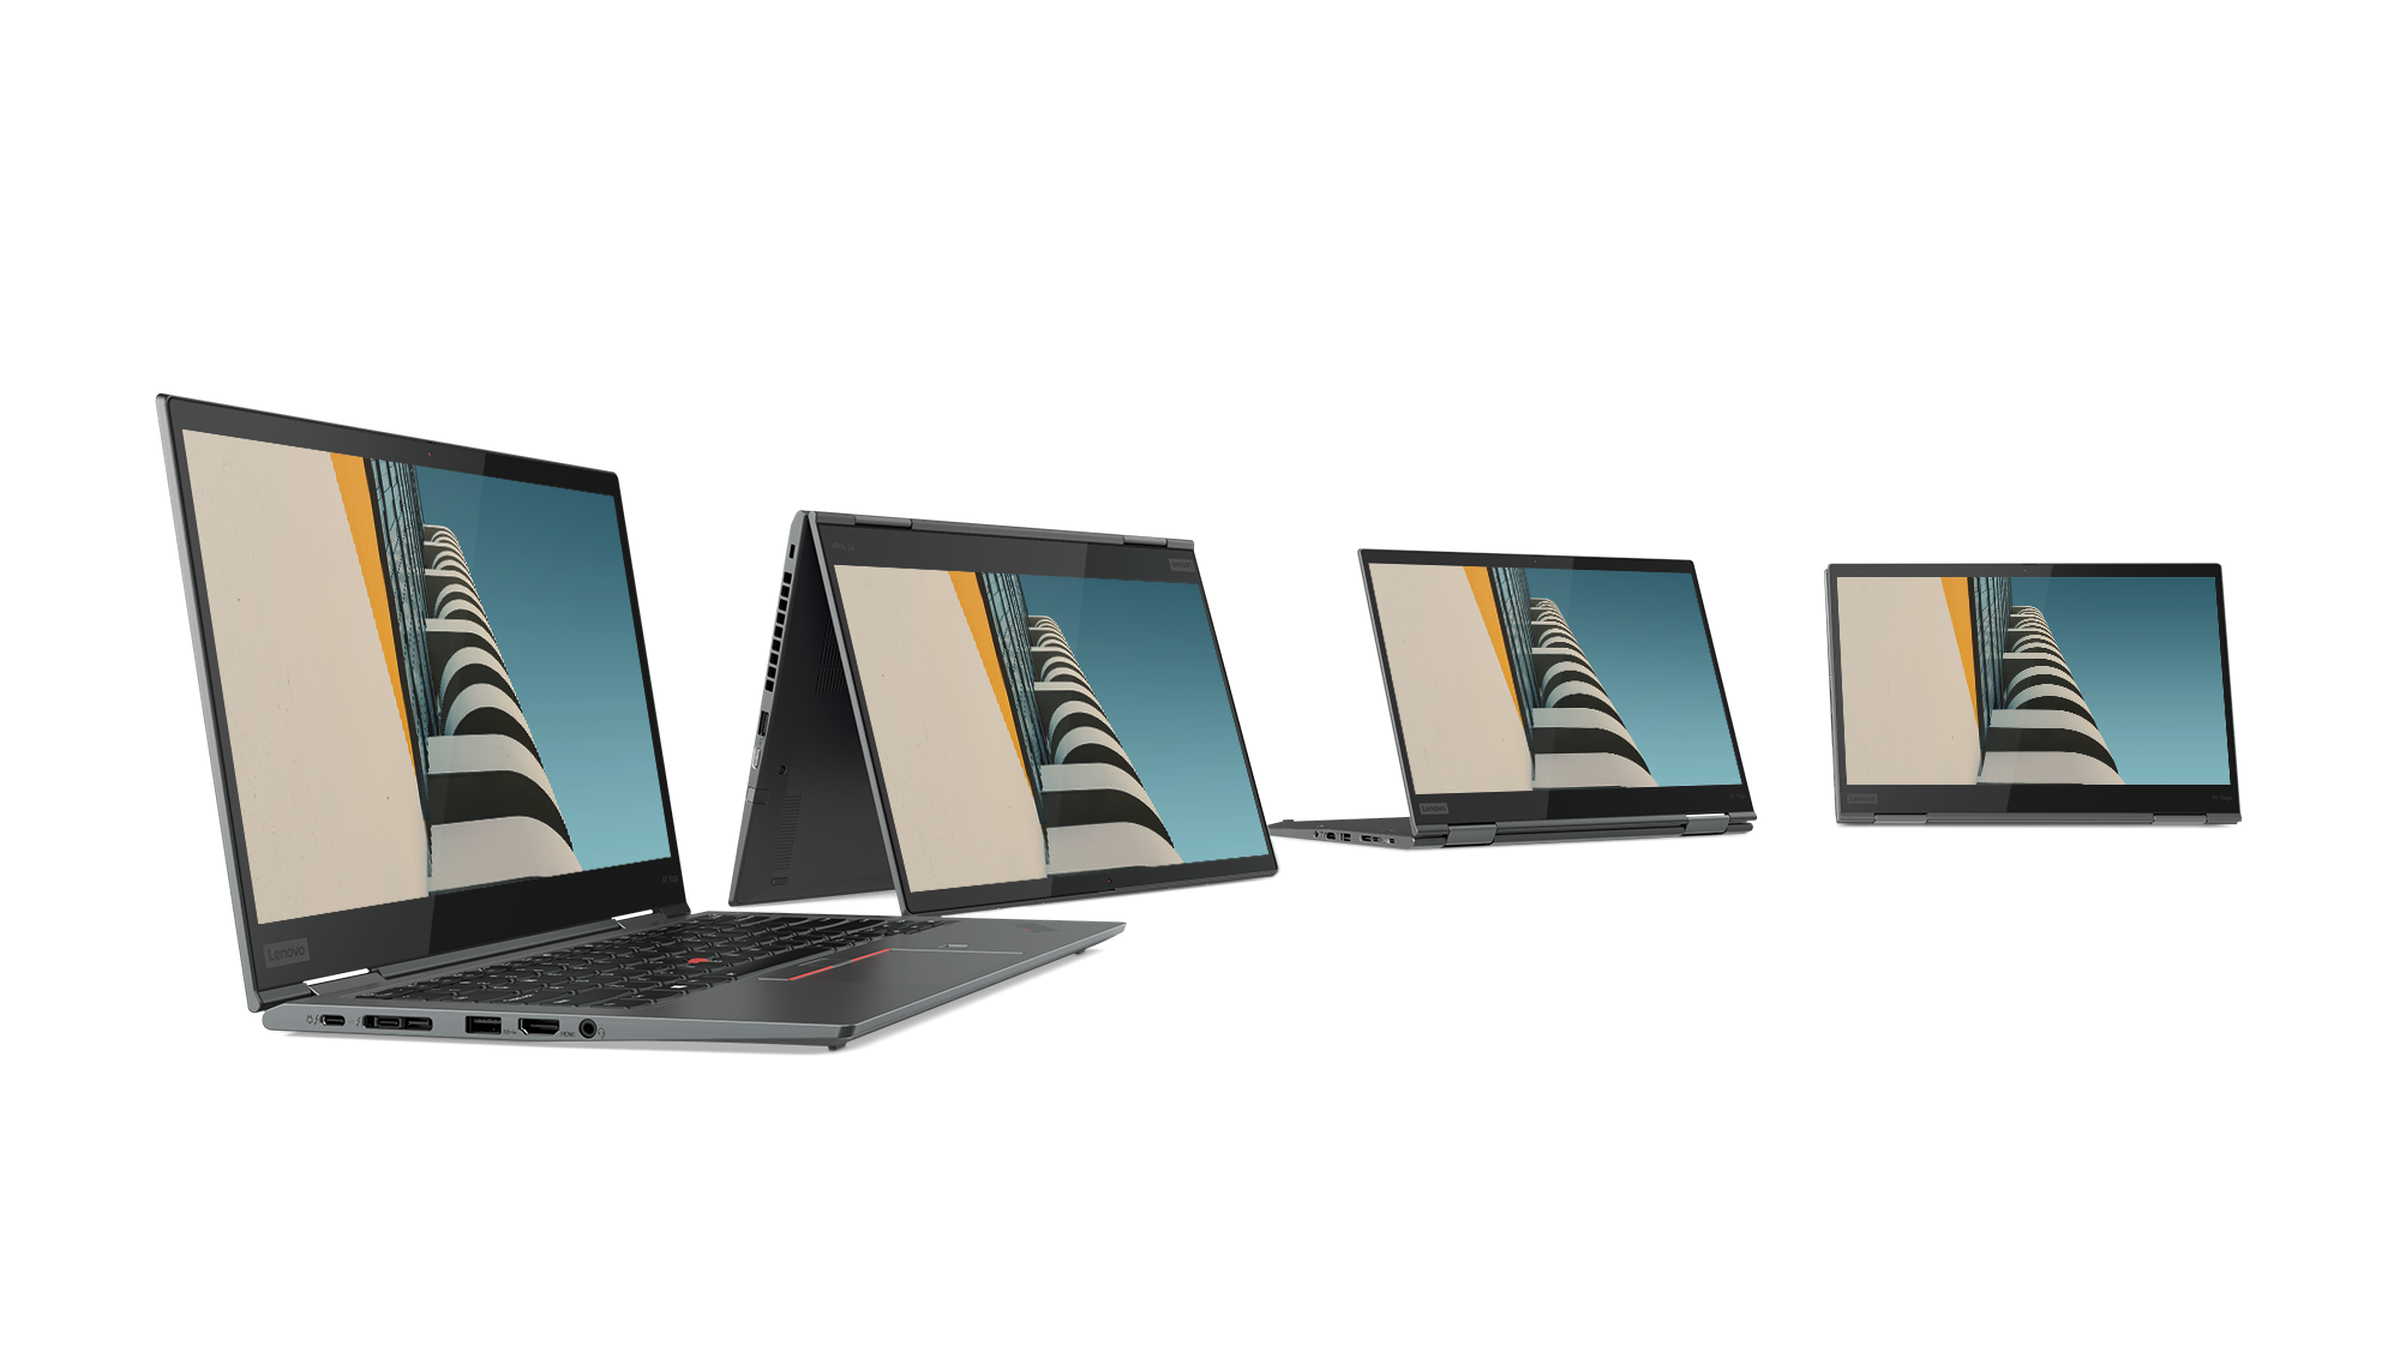 ThinkPad X1 Yoga.